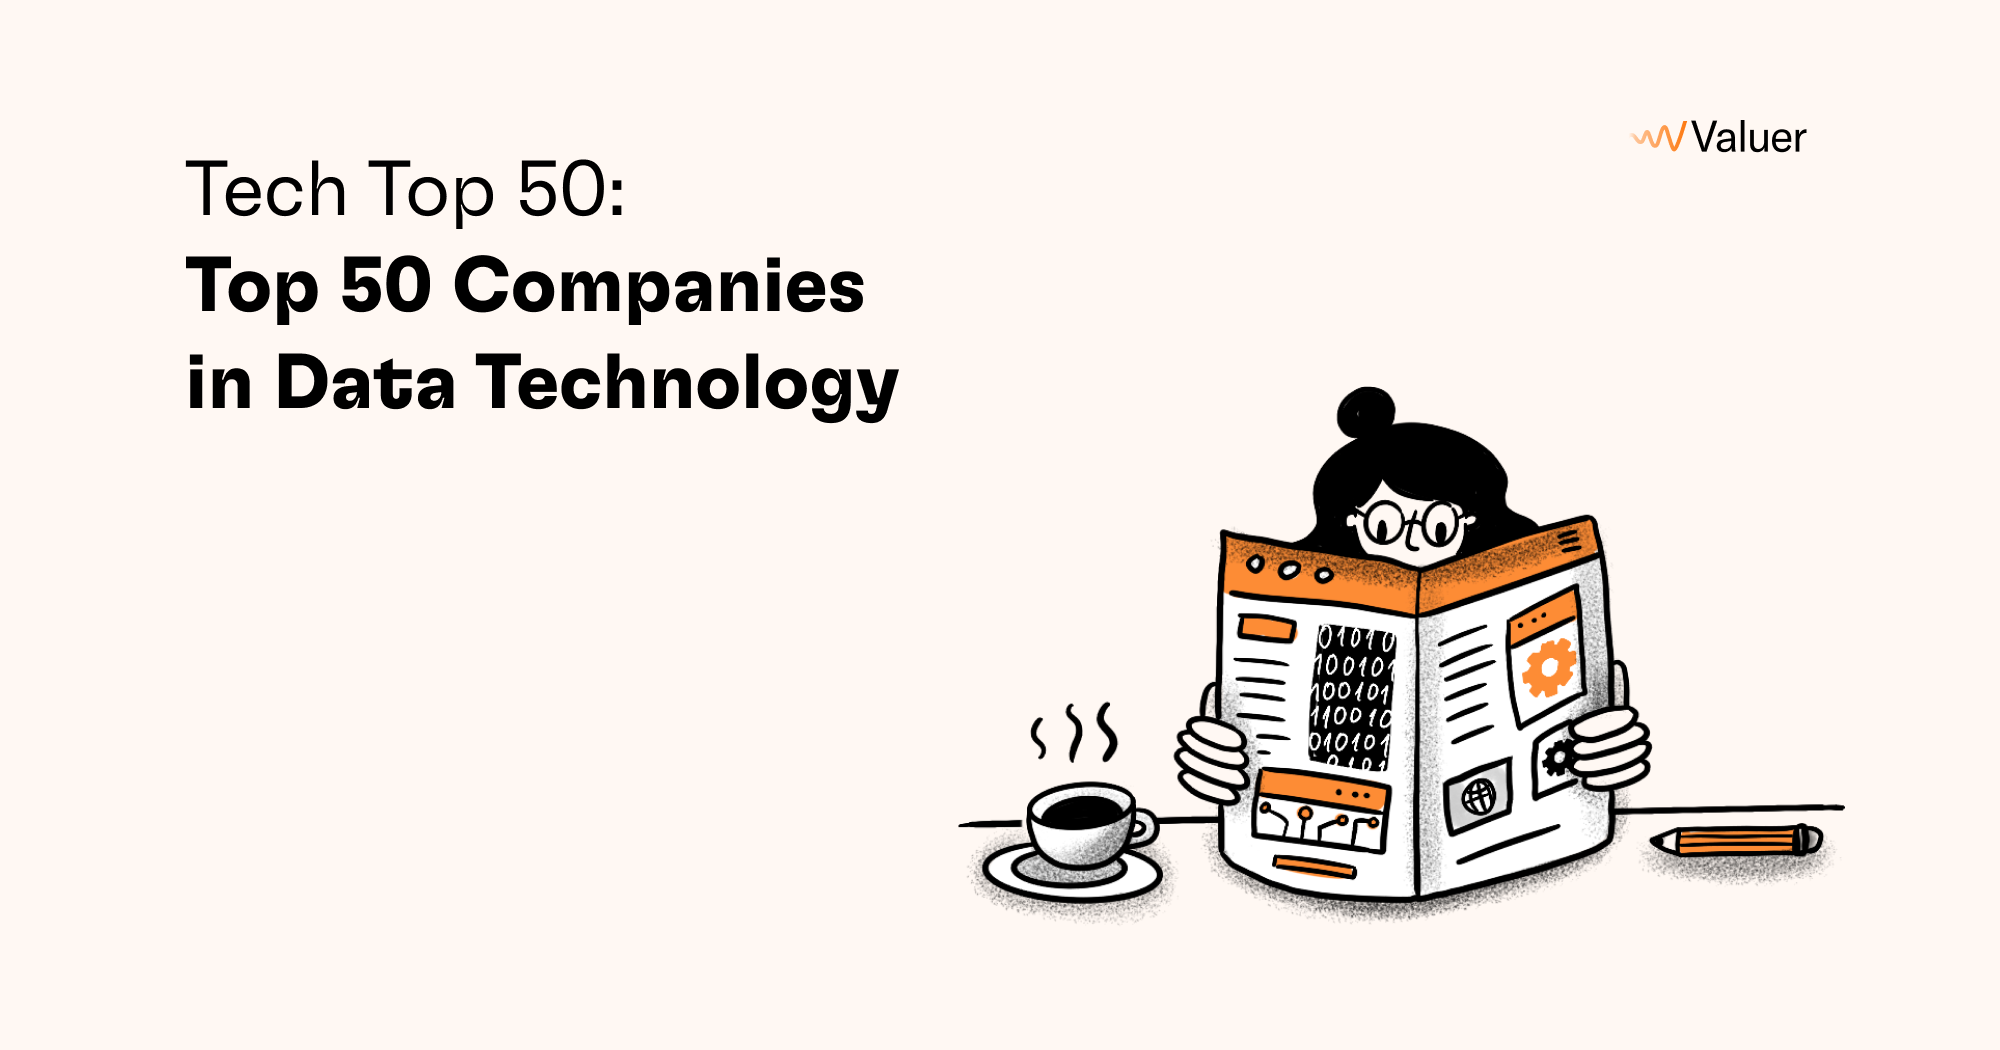 Tech Top 50: Top Companies in Data Technology